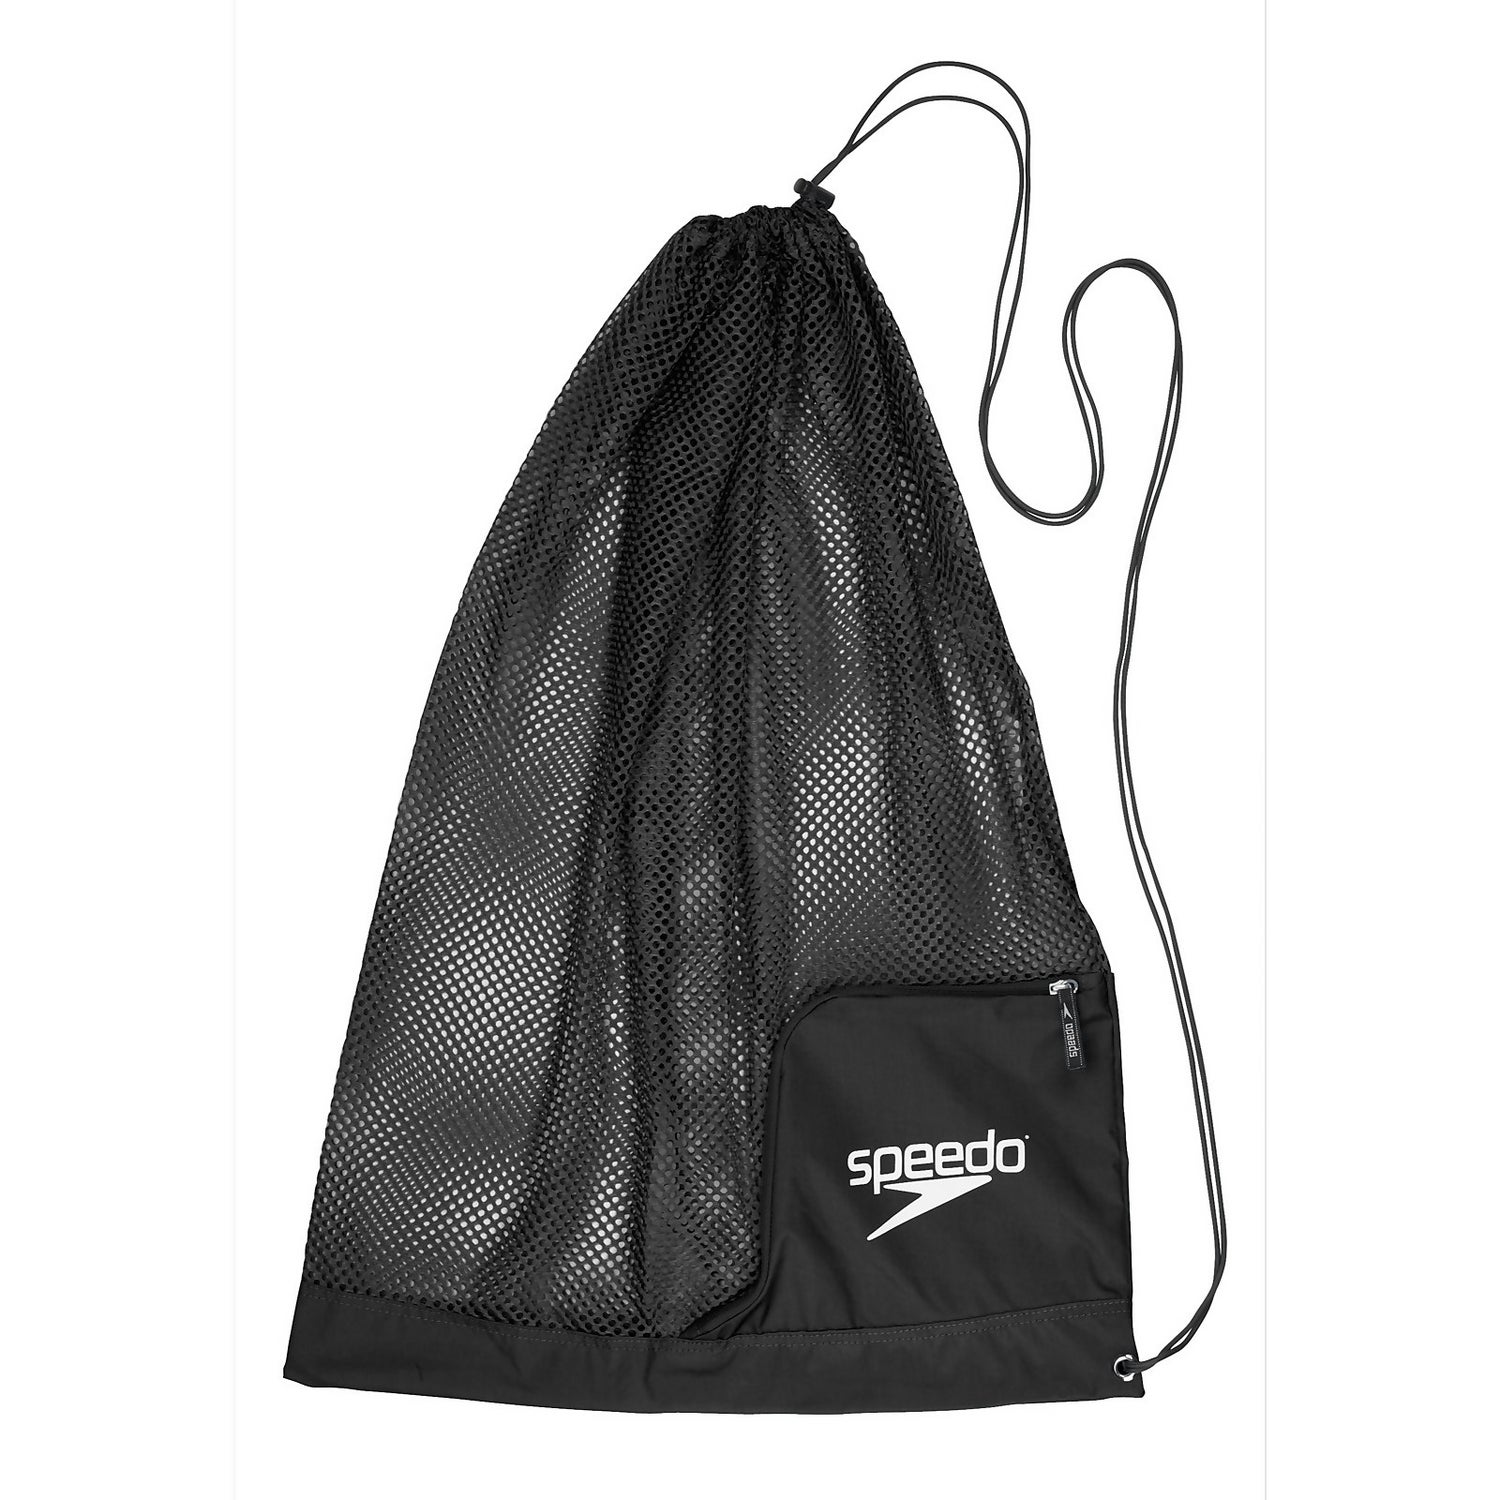 Zipper Black Mesh Net Laundry Bags 18